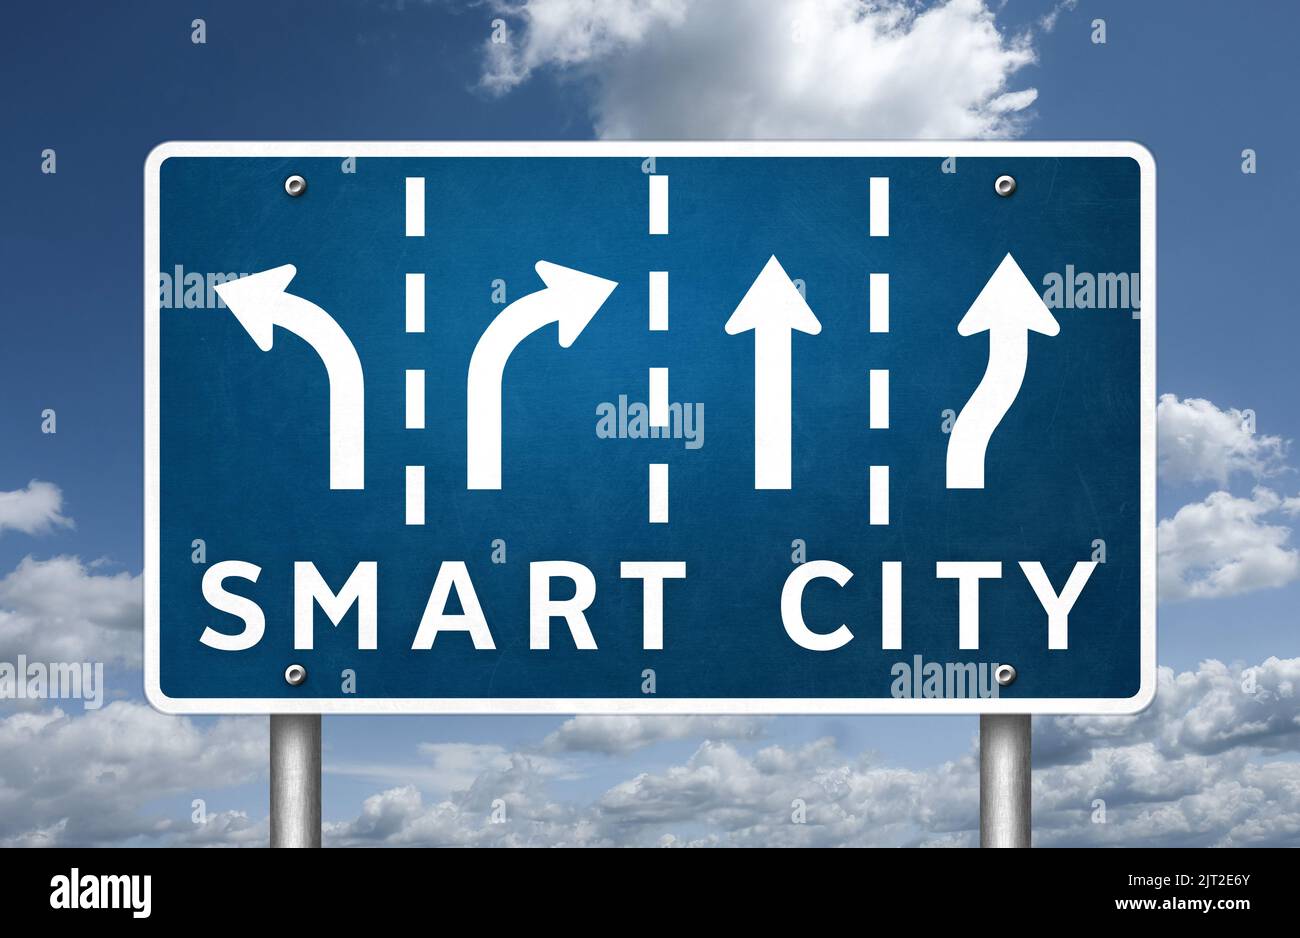 Smart city - modern urban metropolis Stock Photo